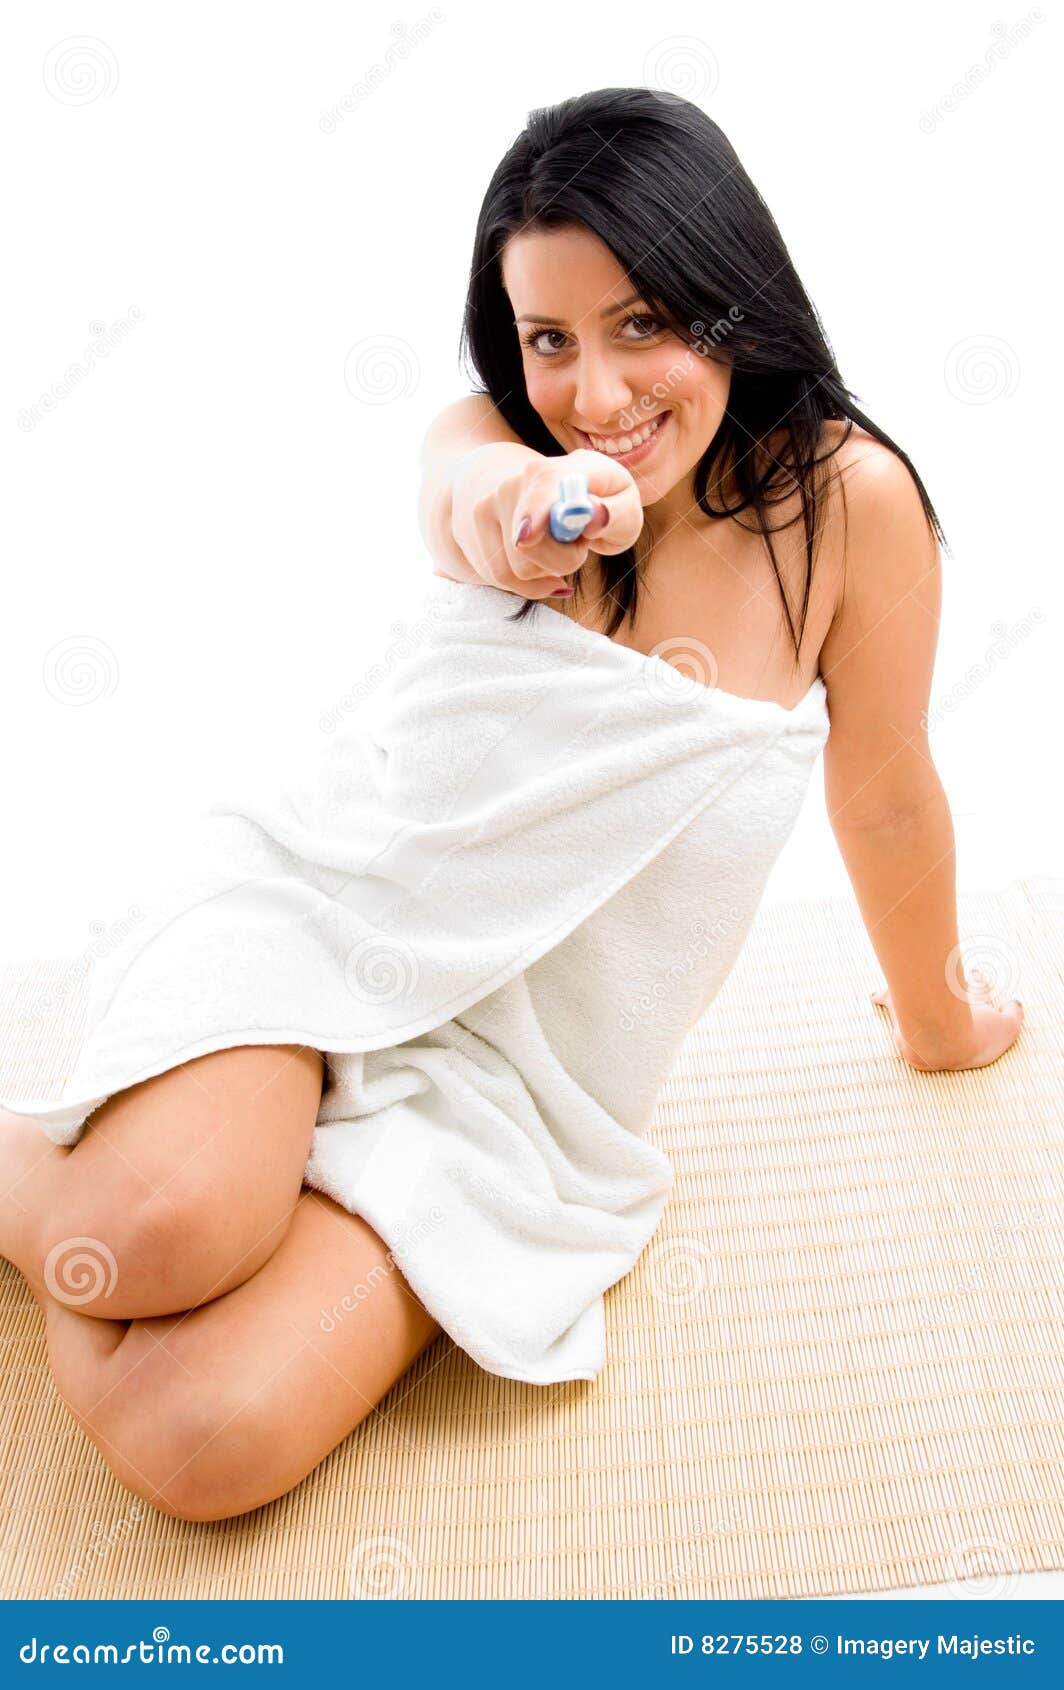 smiling woman scrubbing her body